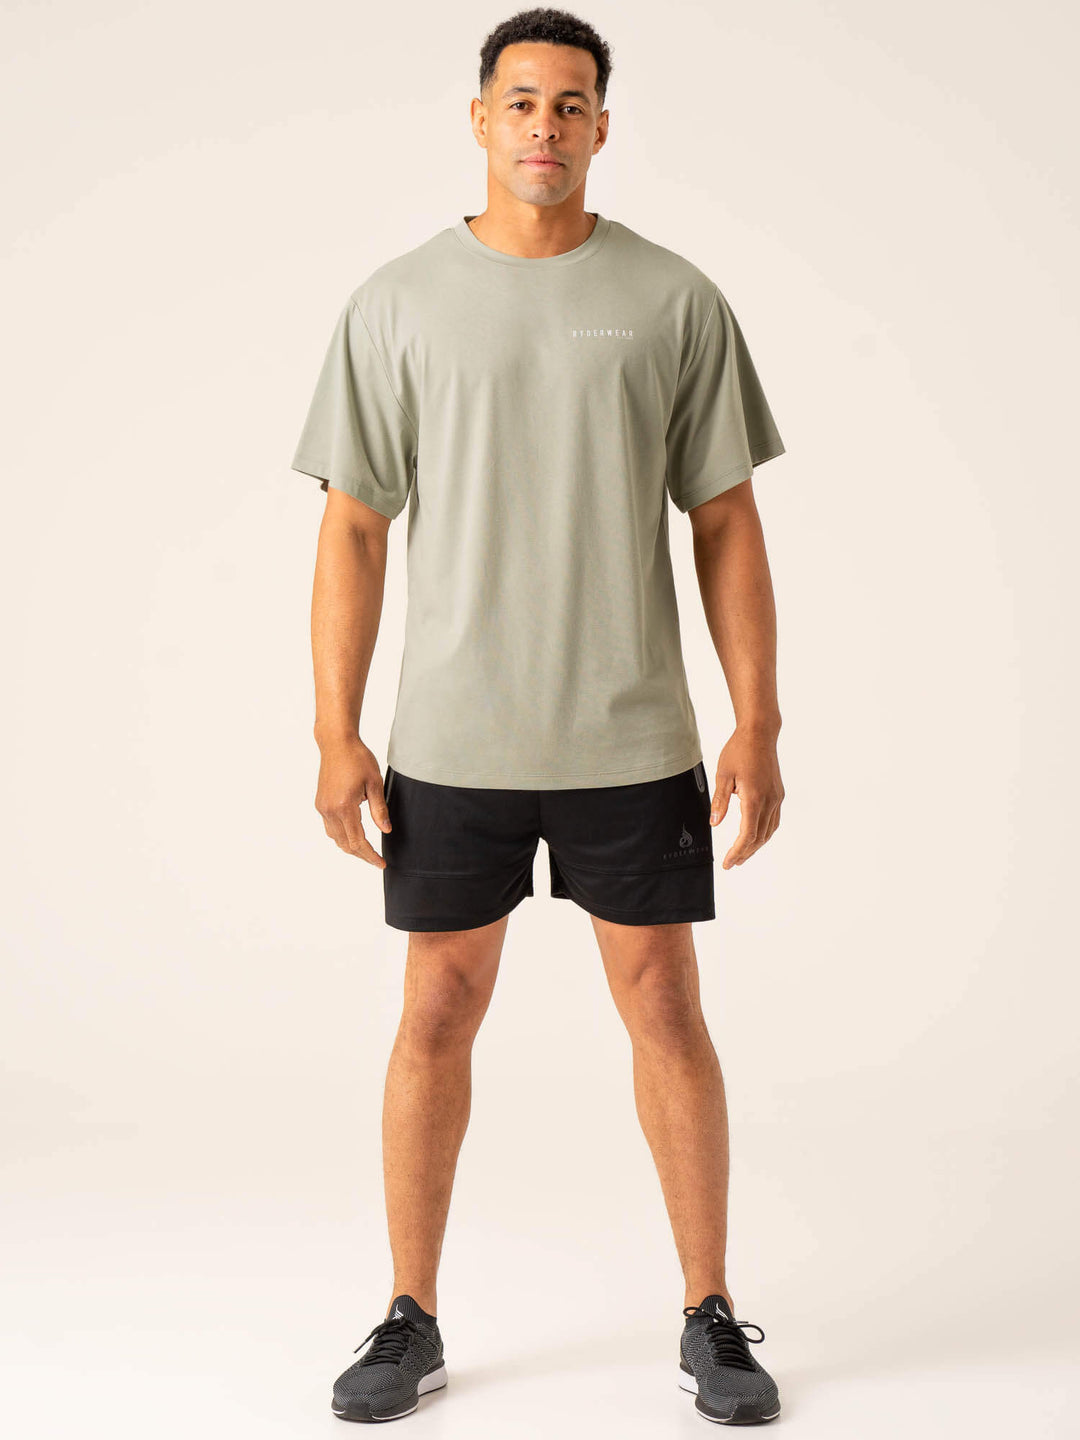 Advance Oversized T-Shirt - Sage Clothing Ryderwear 